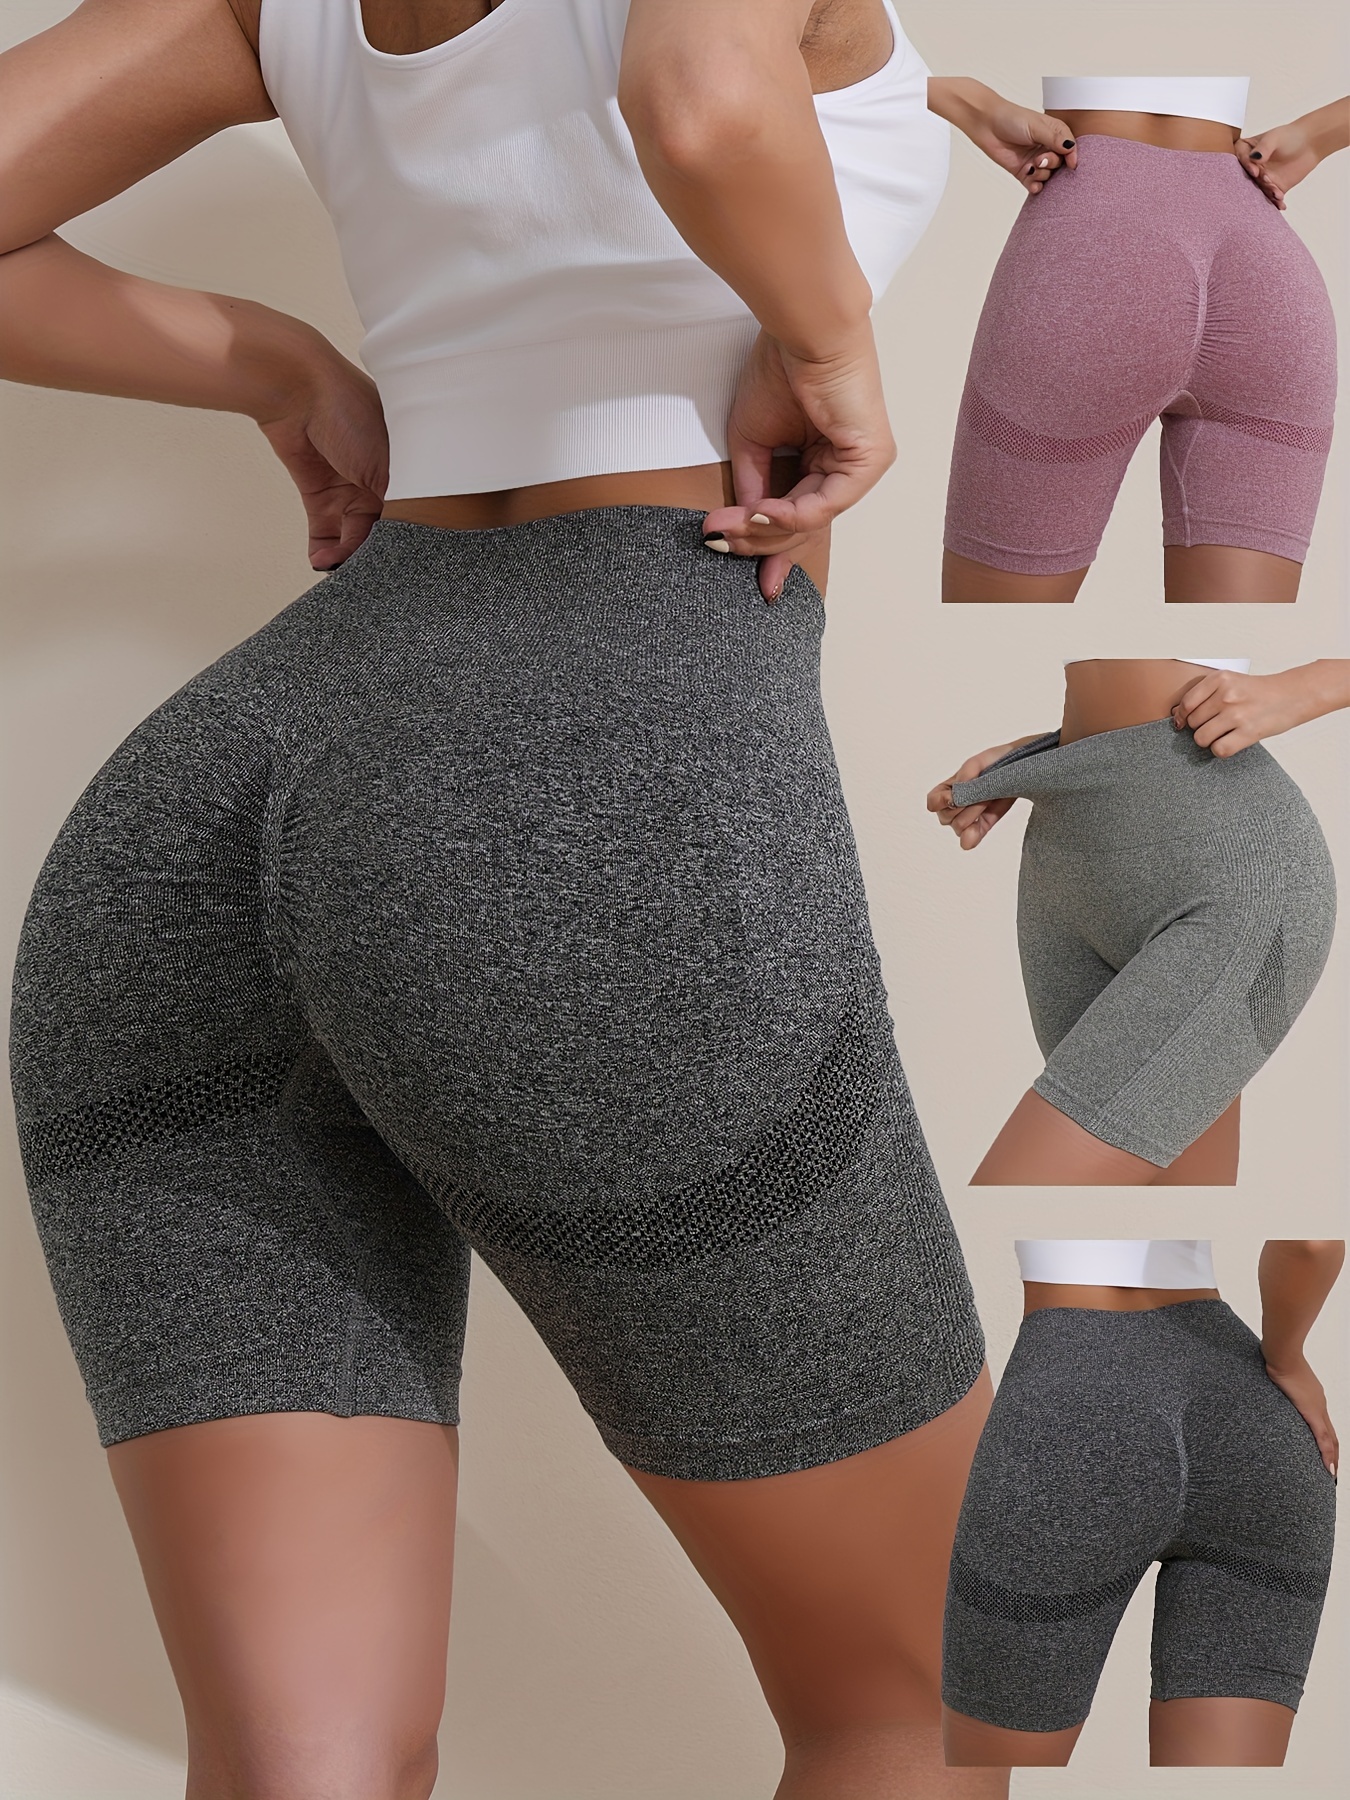 High Waisted Body Shaper Shorts Elastic Shapewear for Women Tummy Control  Butt Lifting Leggings Yoga Gym Biker Shorts